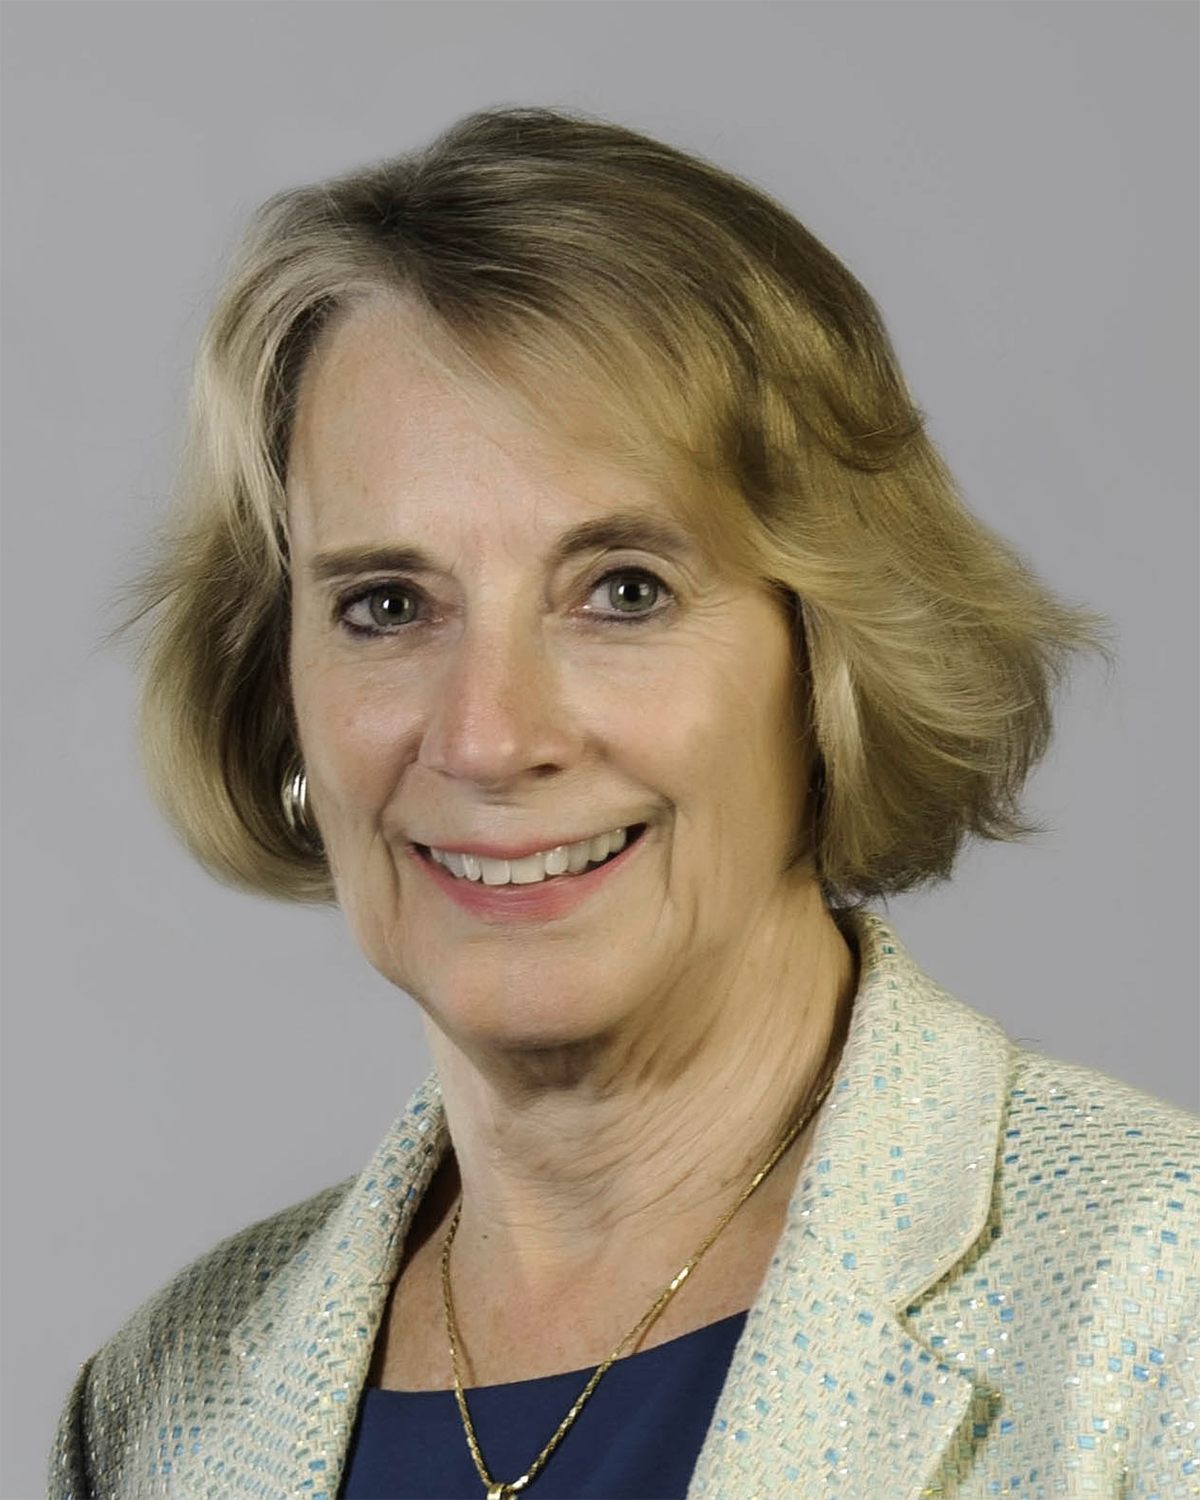 Christina Ernst, CEO, Miller Construction Company